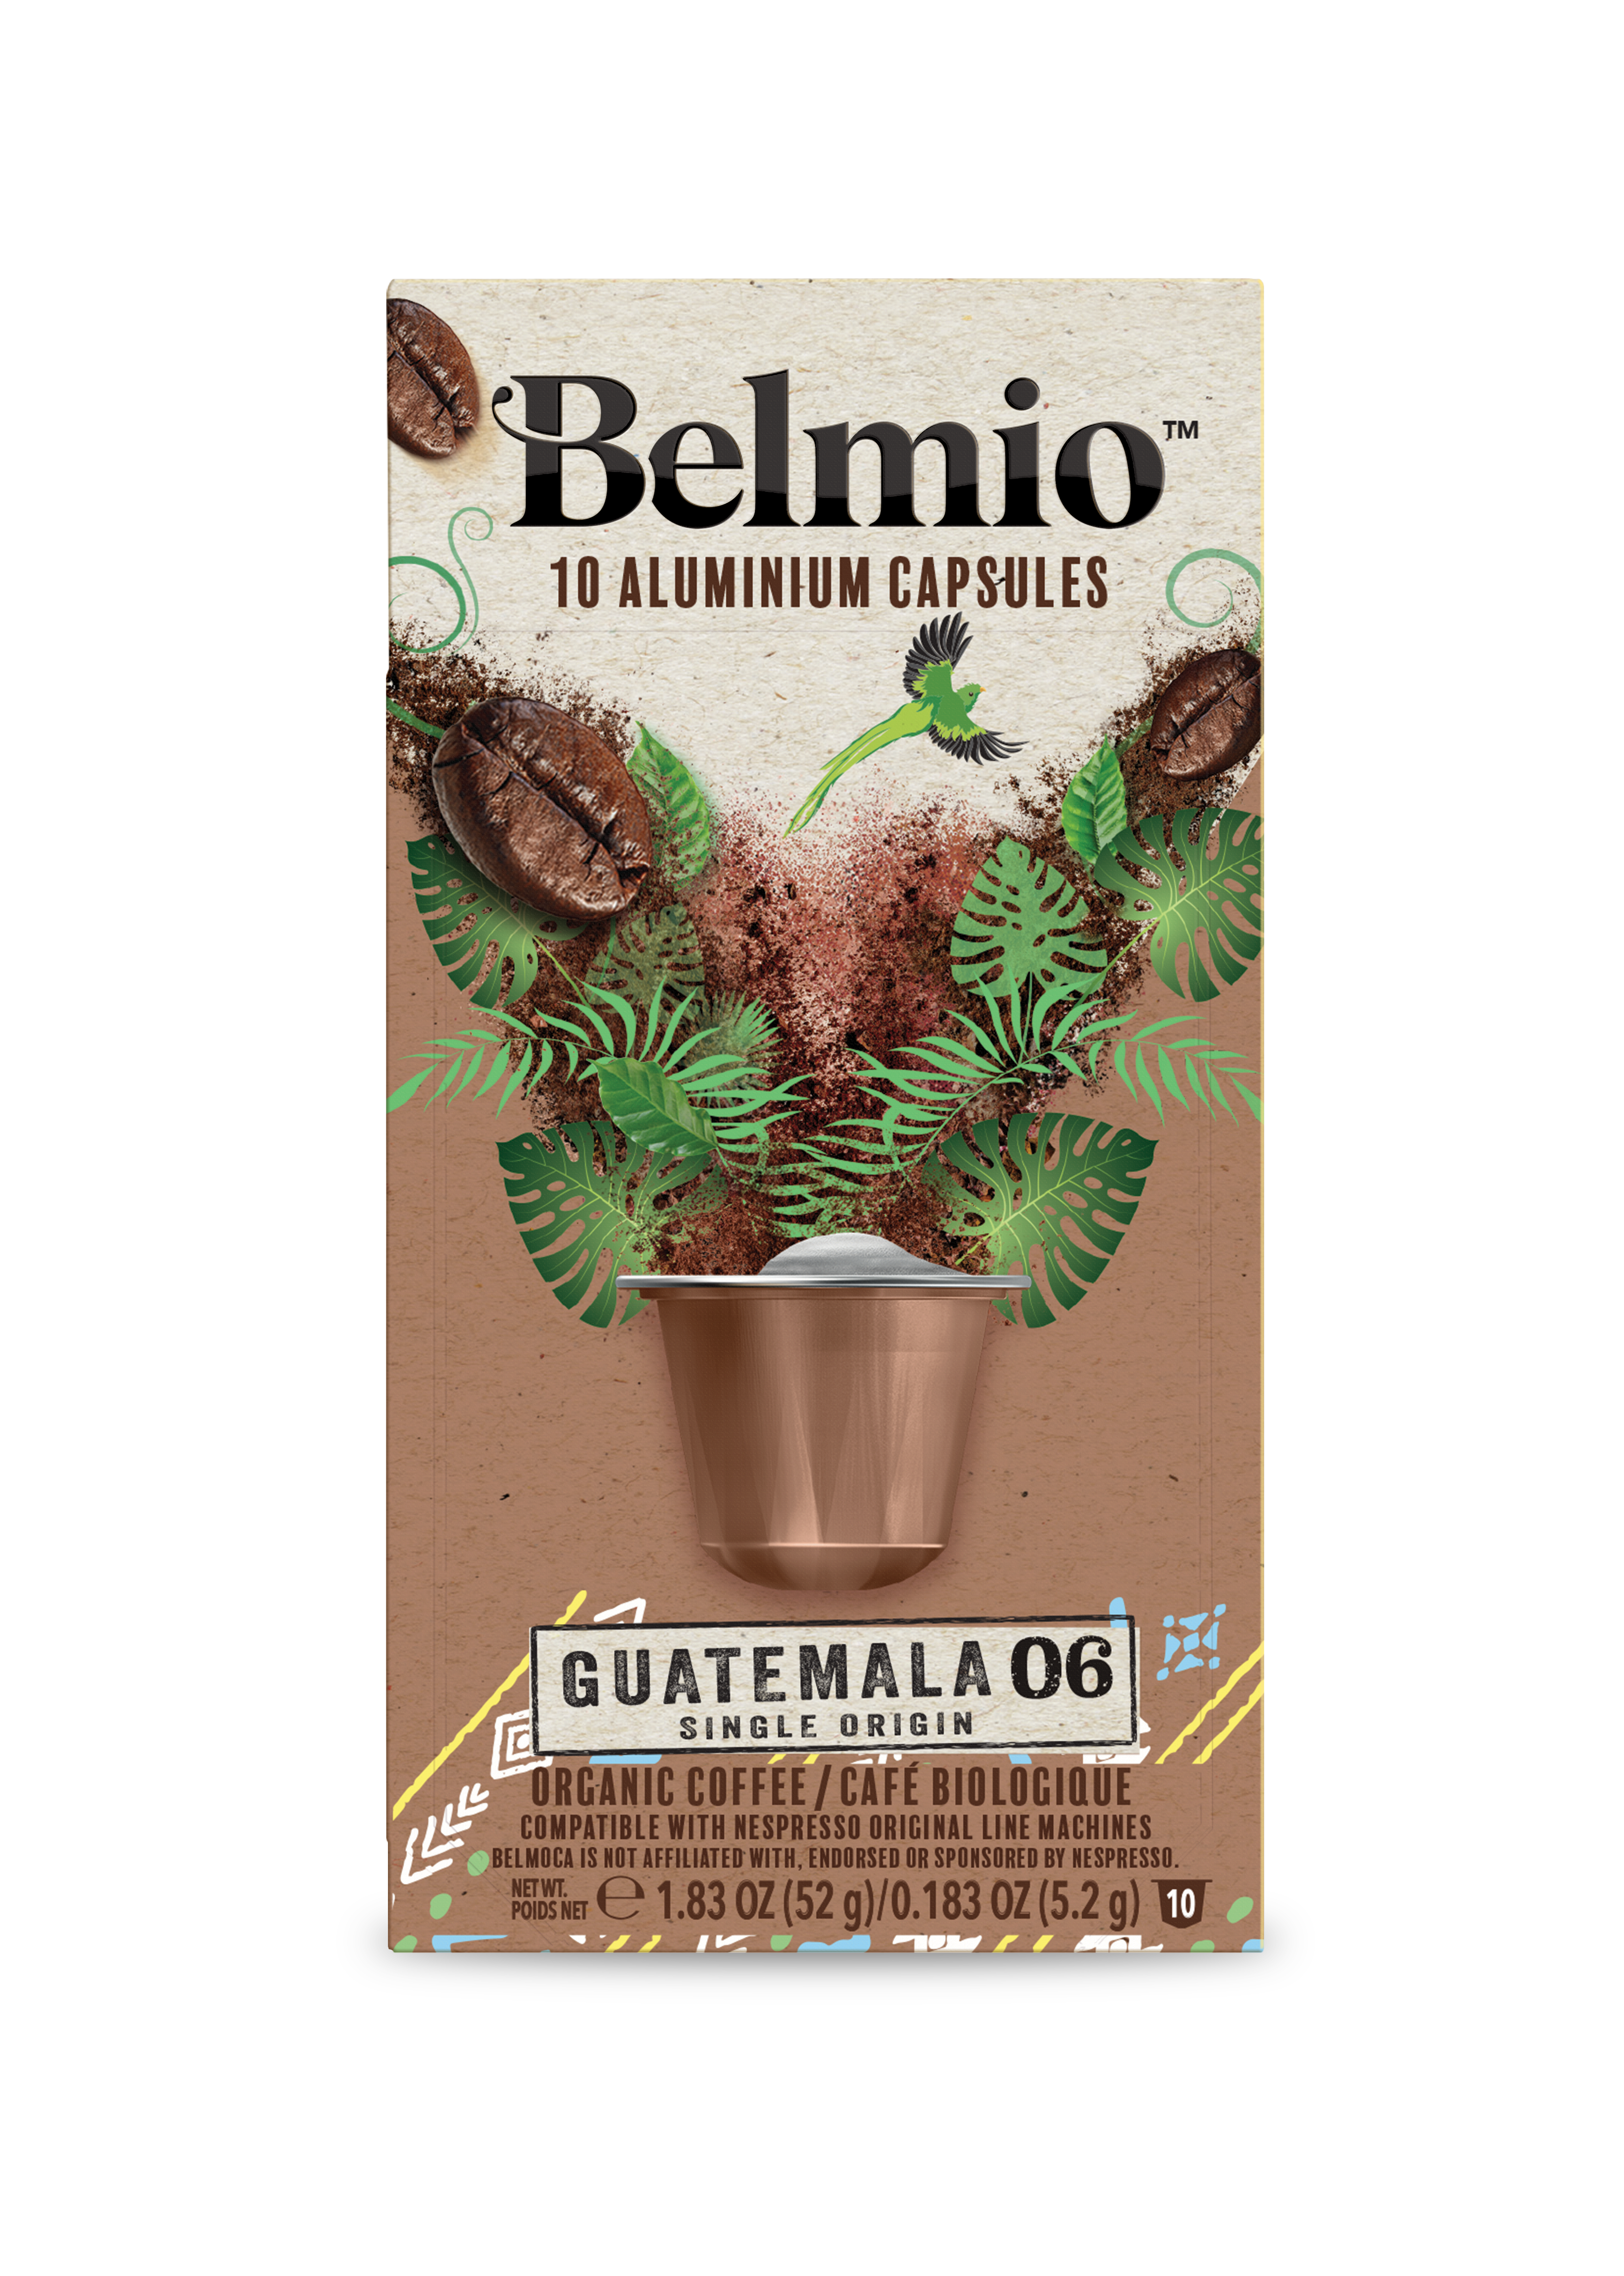 Belmio Guatemala Capsules for Nespresso (10)